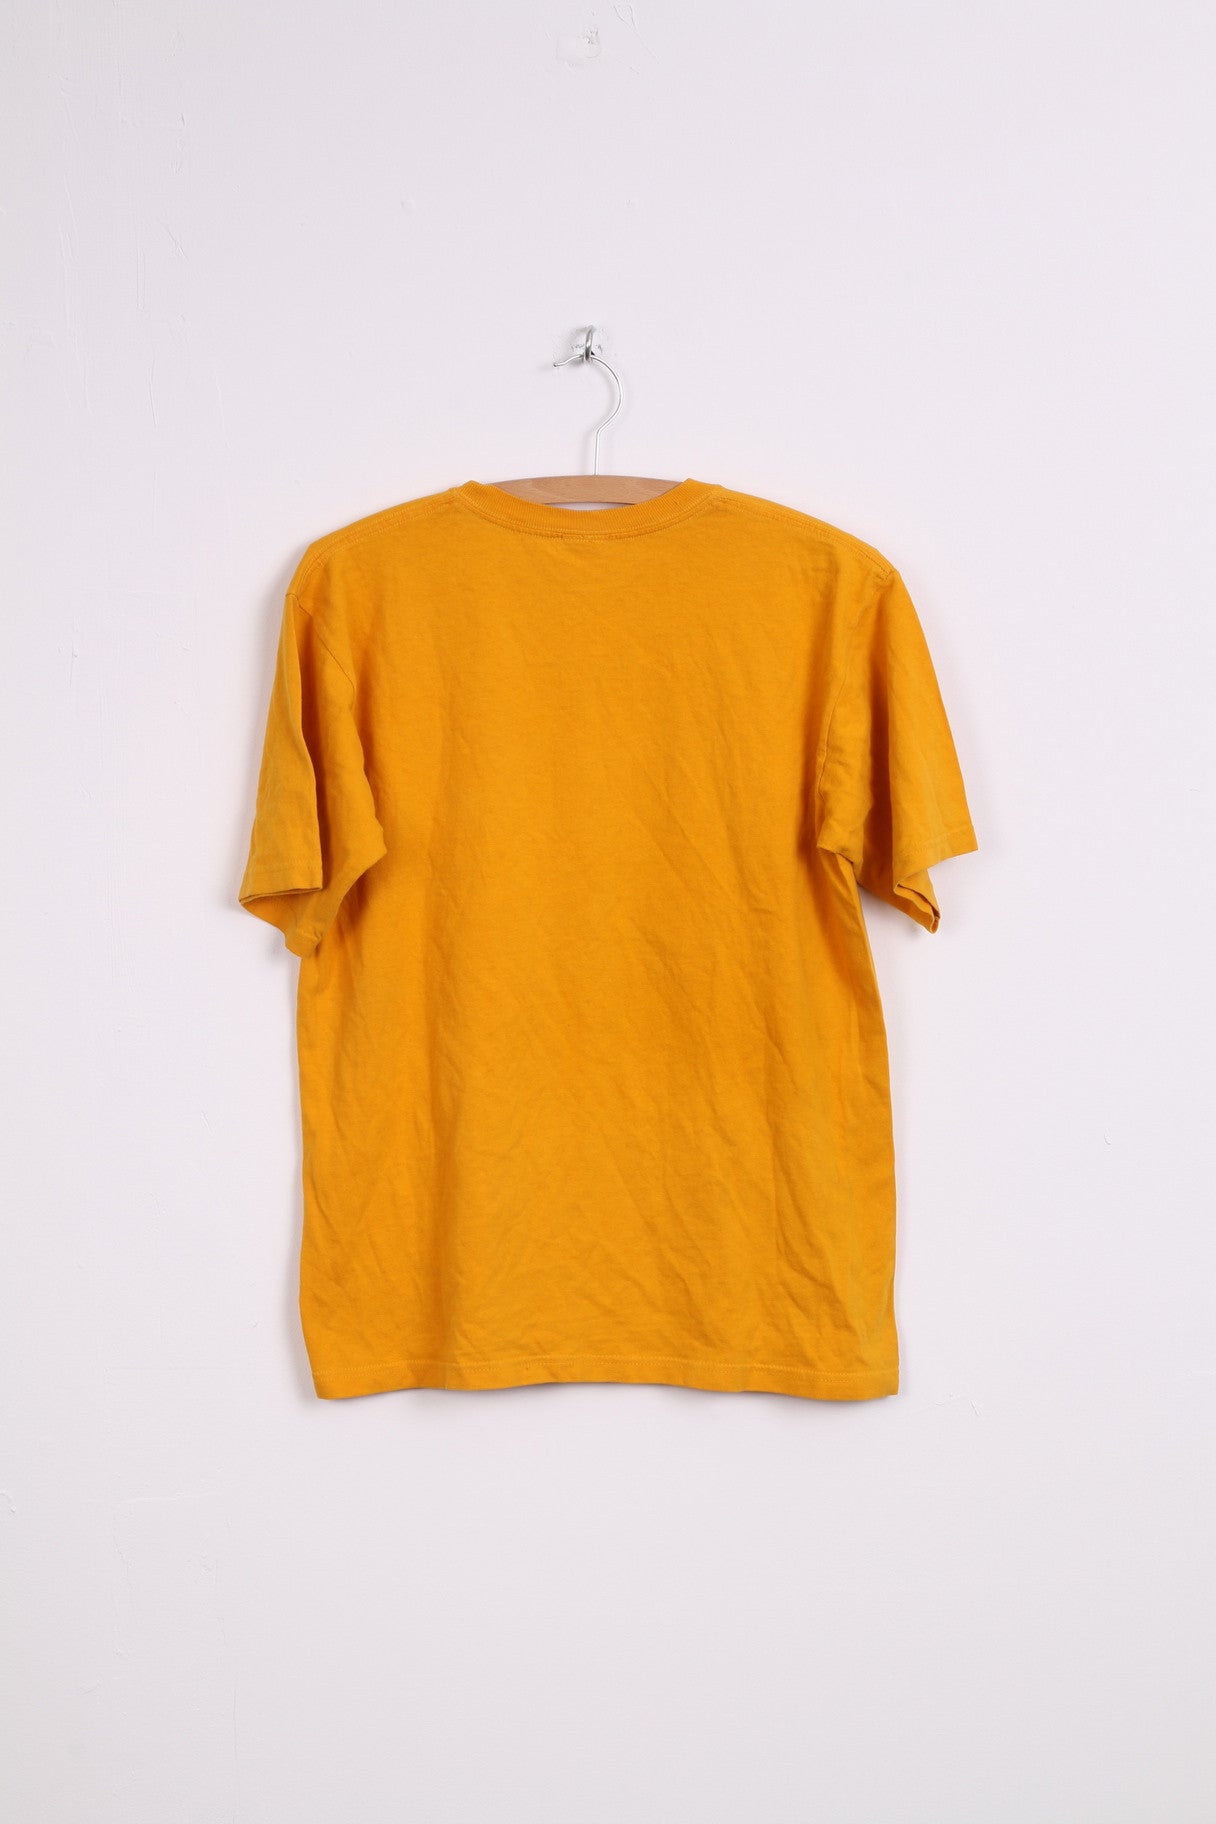 Disney Store Boys L T-Shirt Orange Mickey Of The Move Cotton